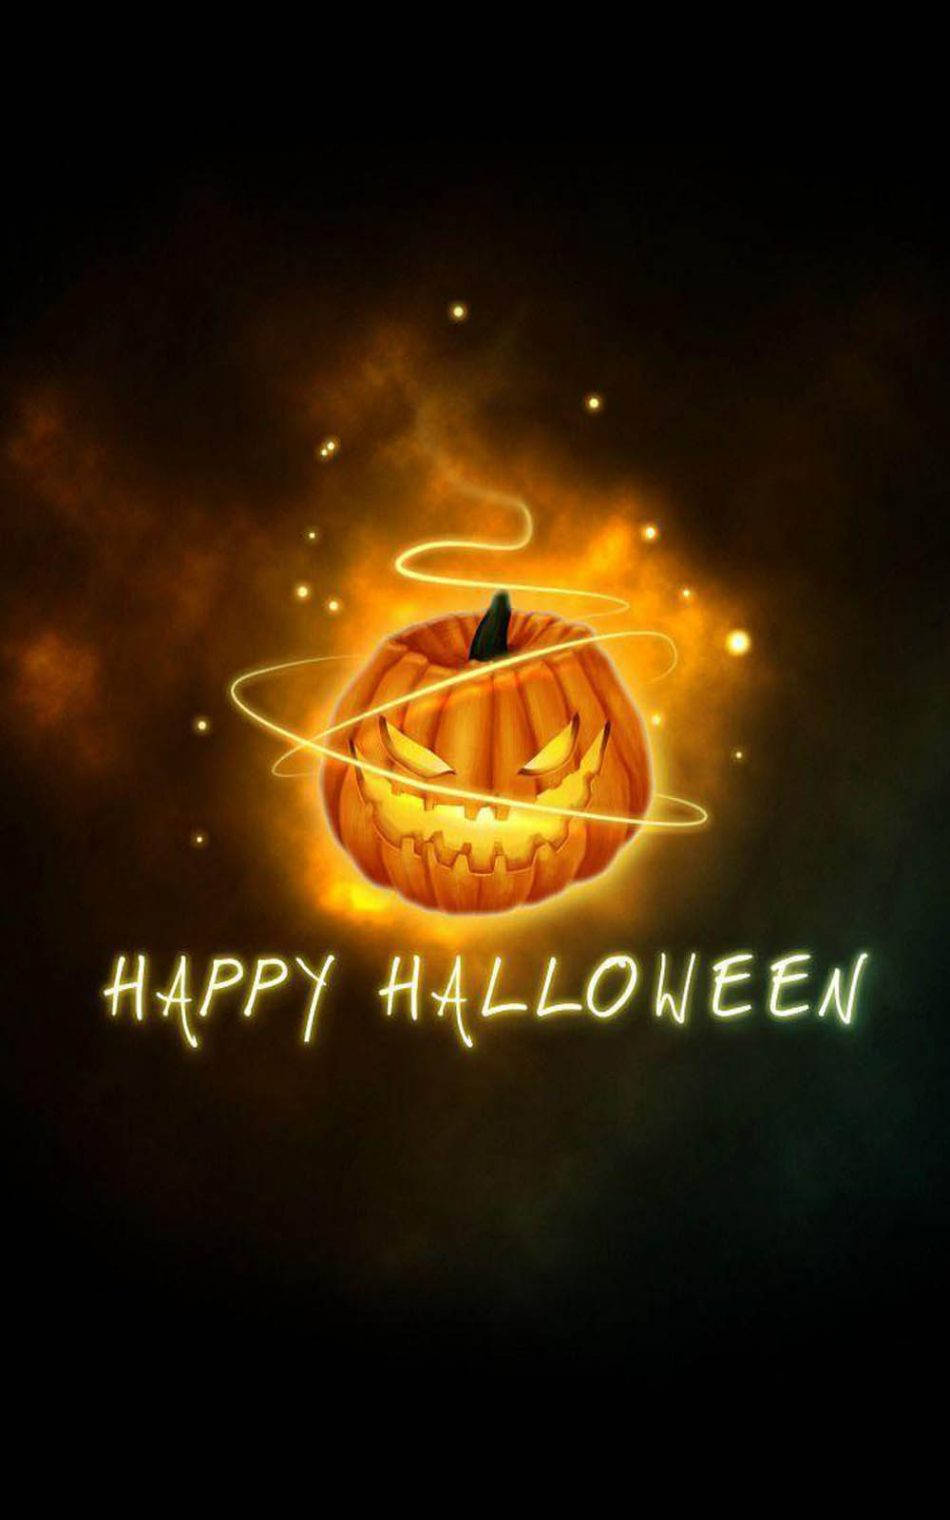 Have A Spook-tacular Happy Halloween!